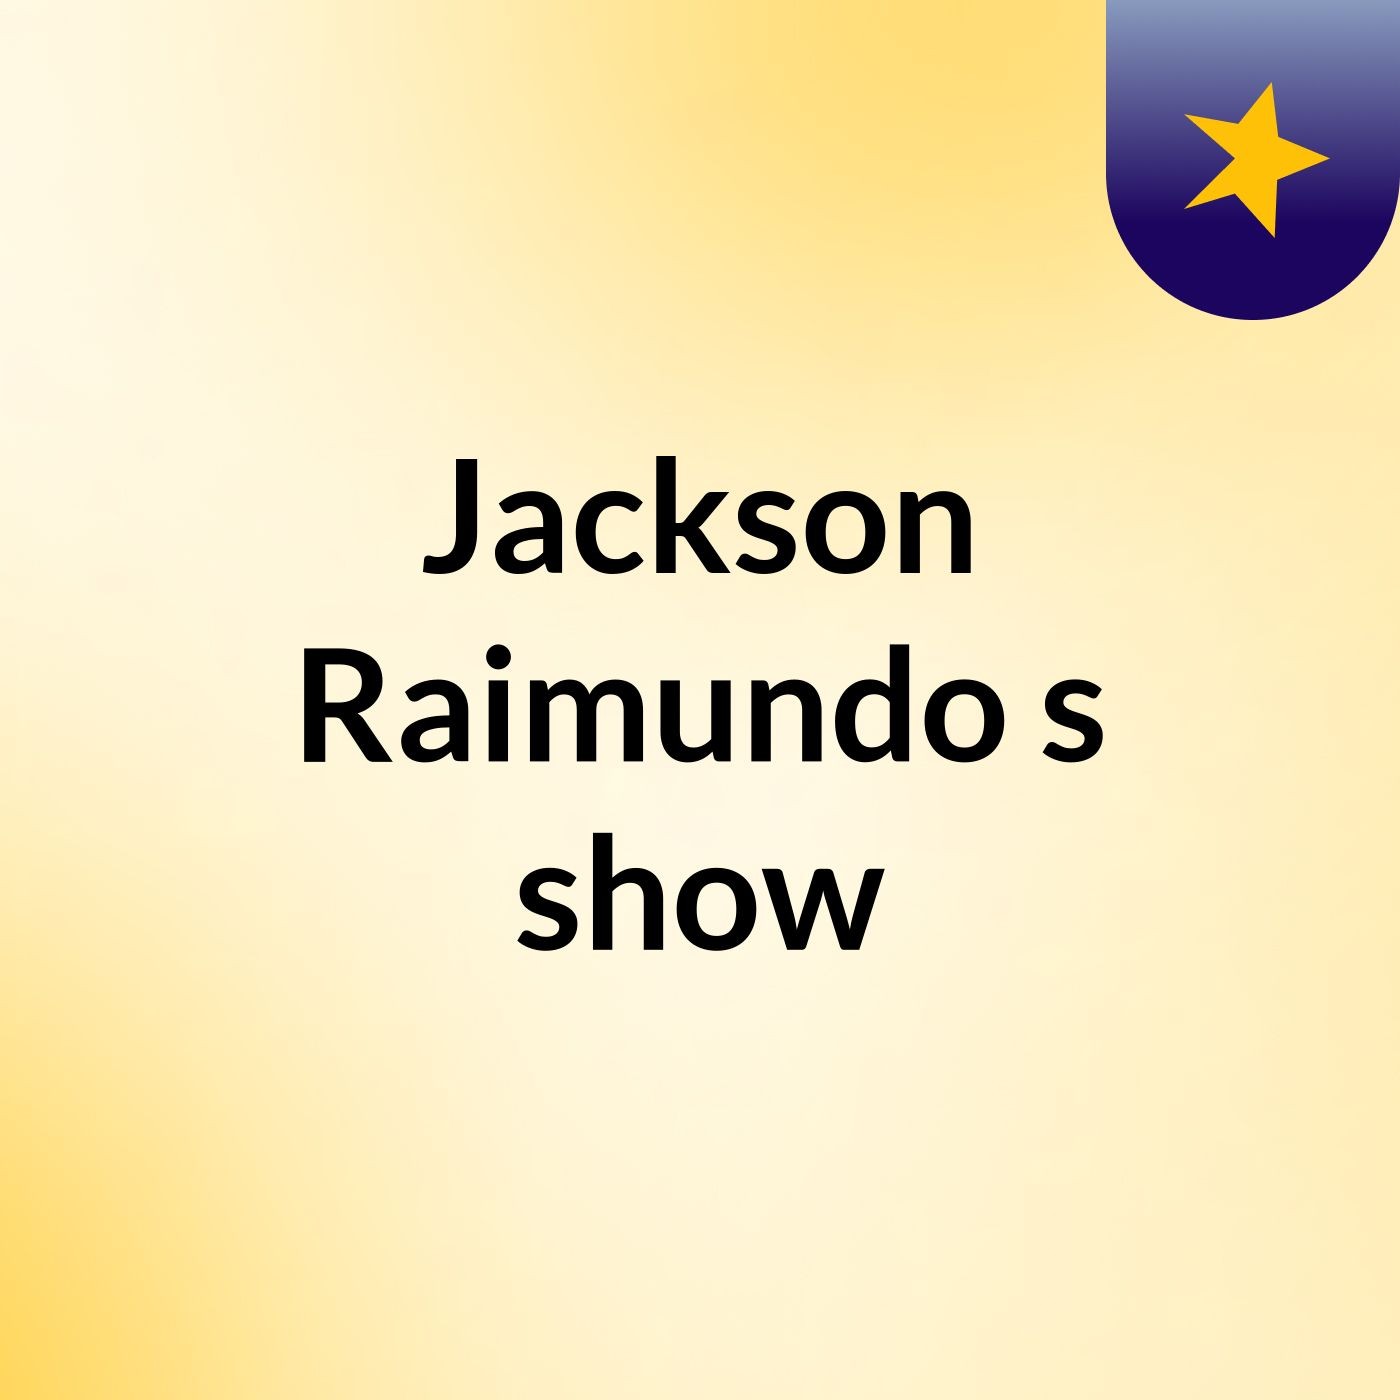 Jackson Raimundo's show